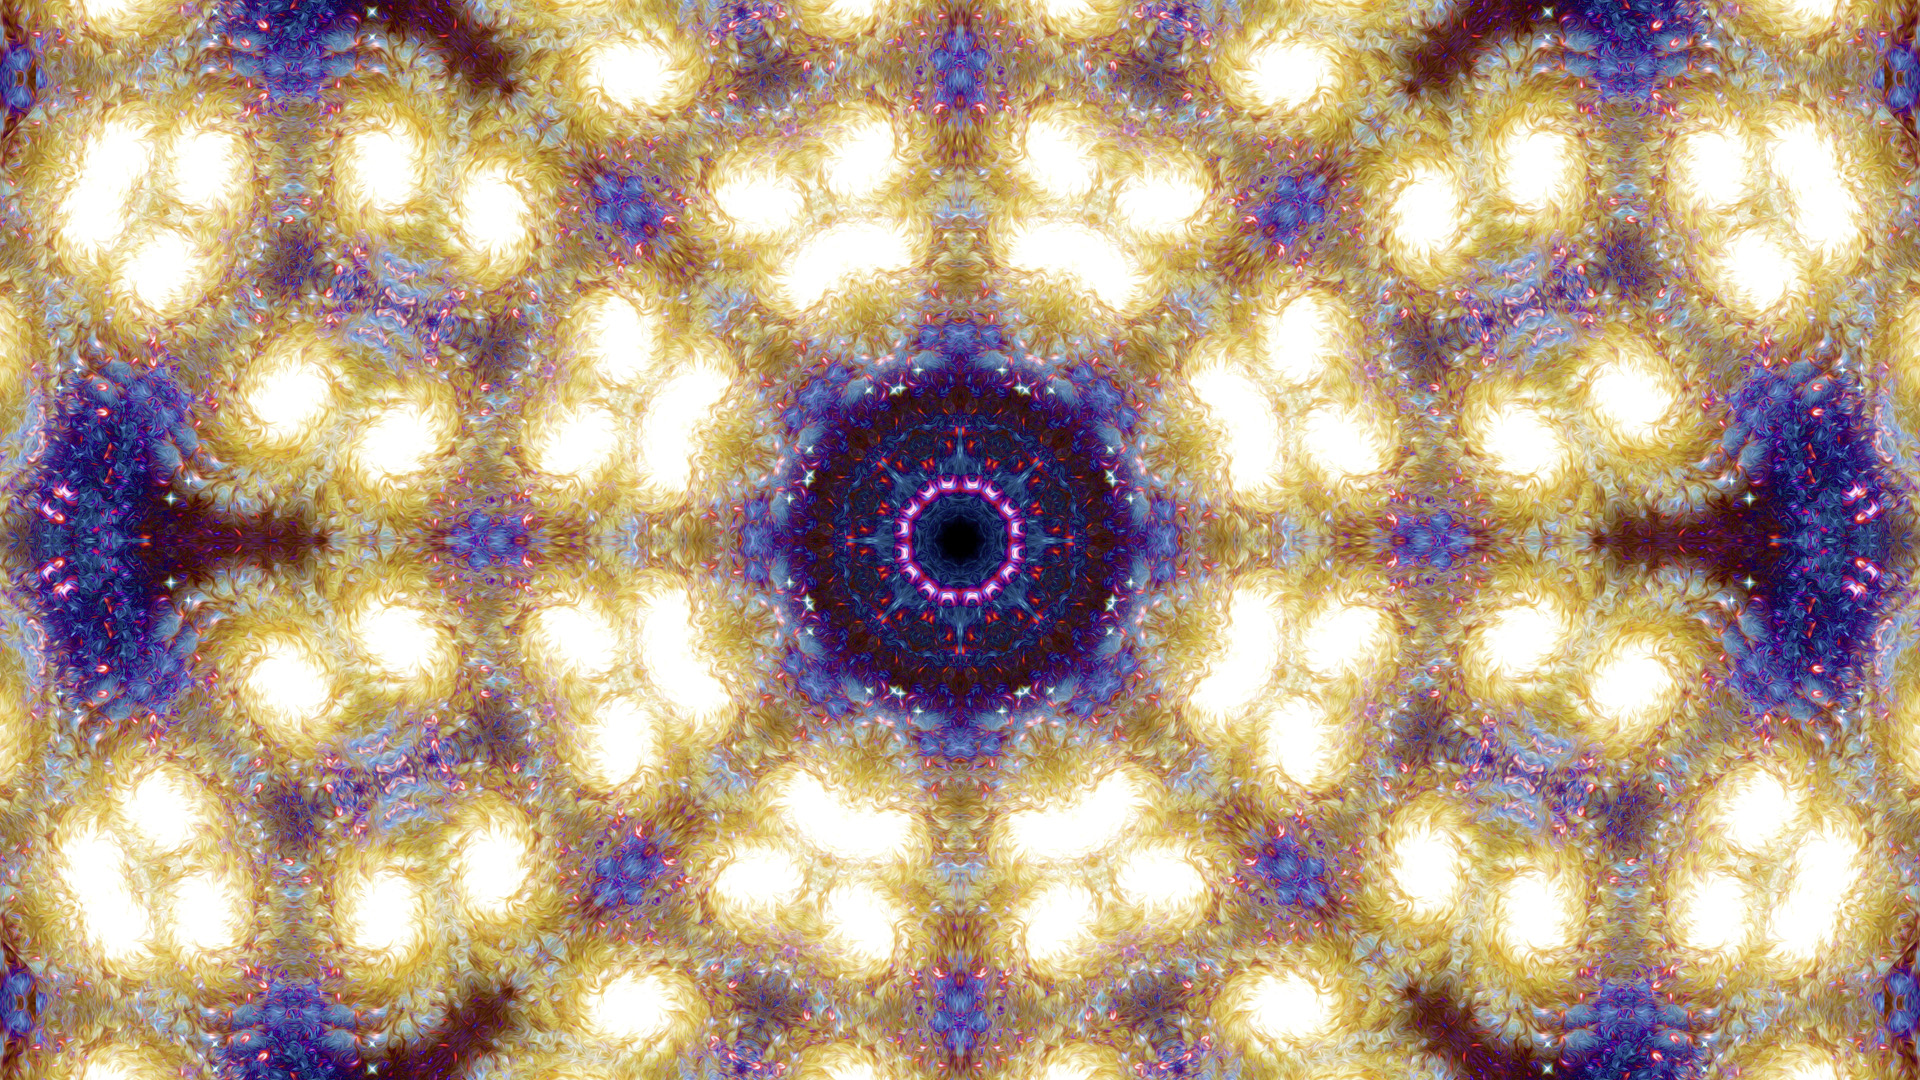 Artistic Manipulation Digital Art Abstract Mandala Space Energy Pattern 1920x1080